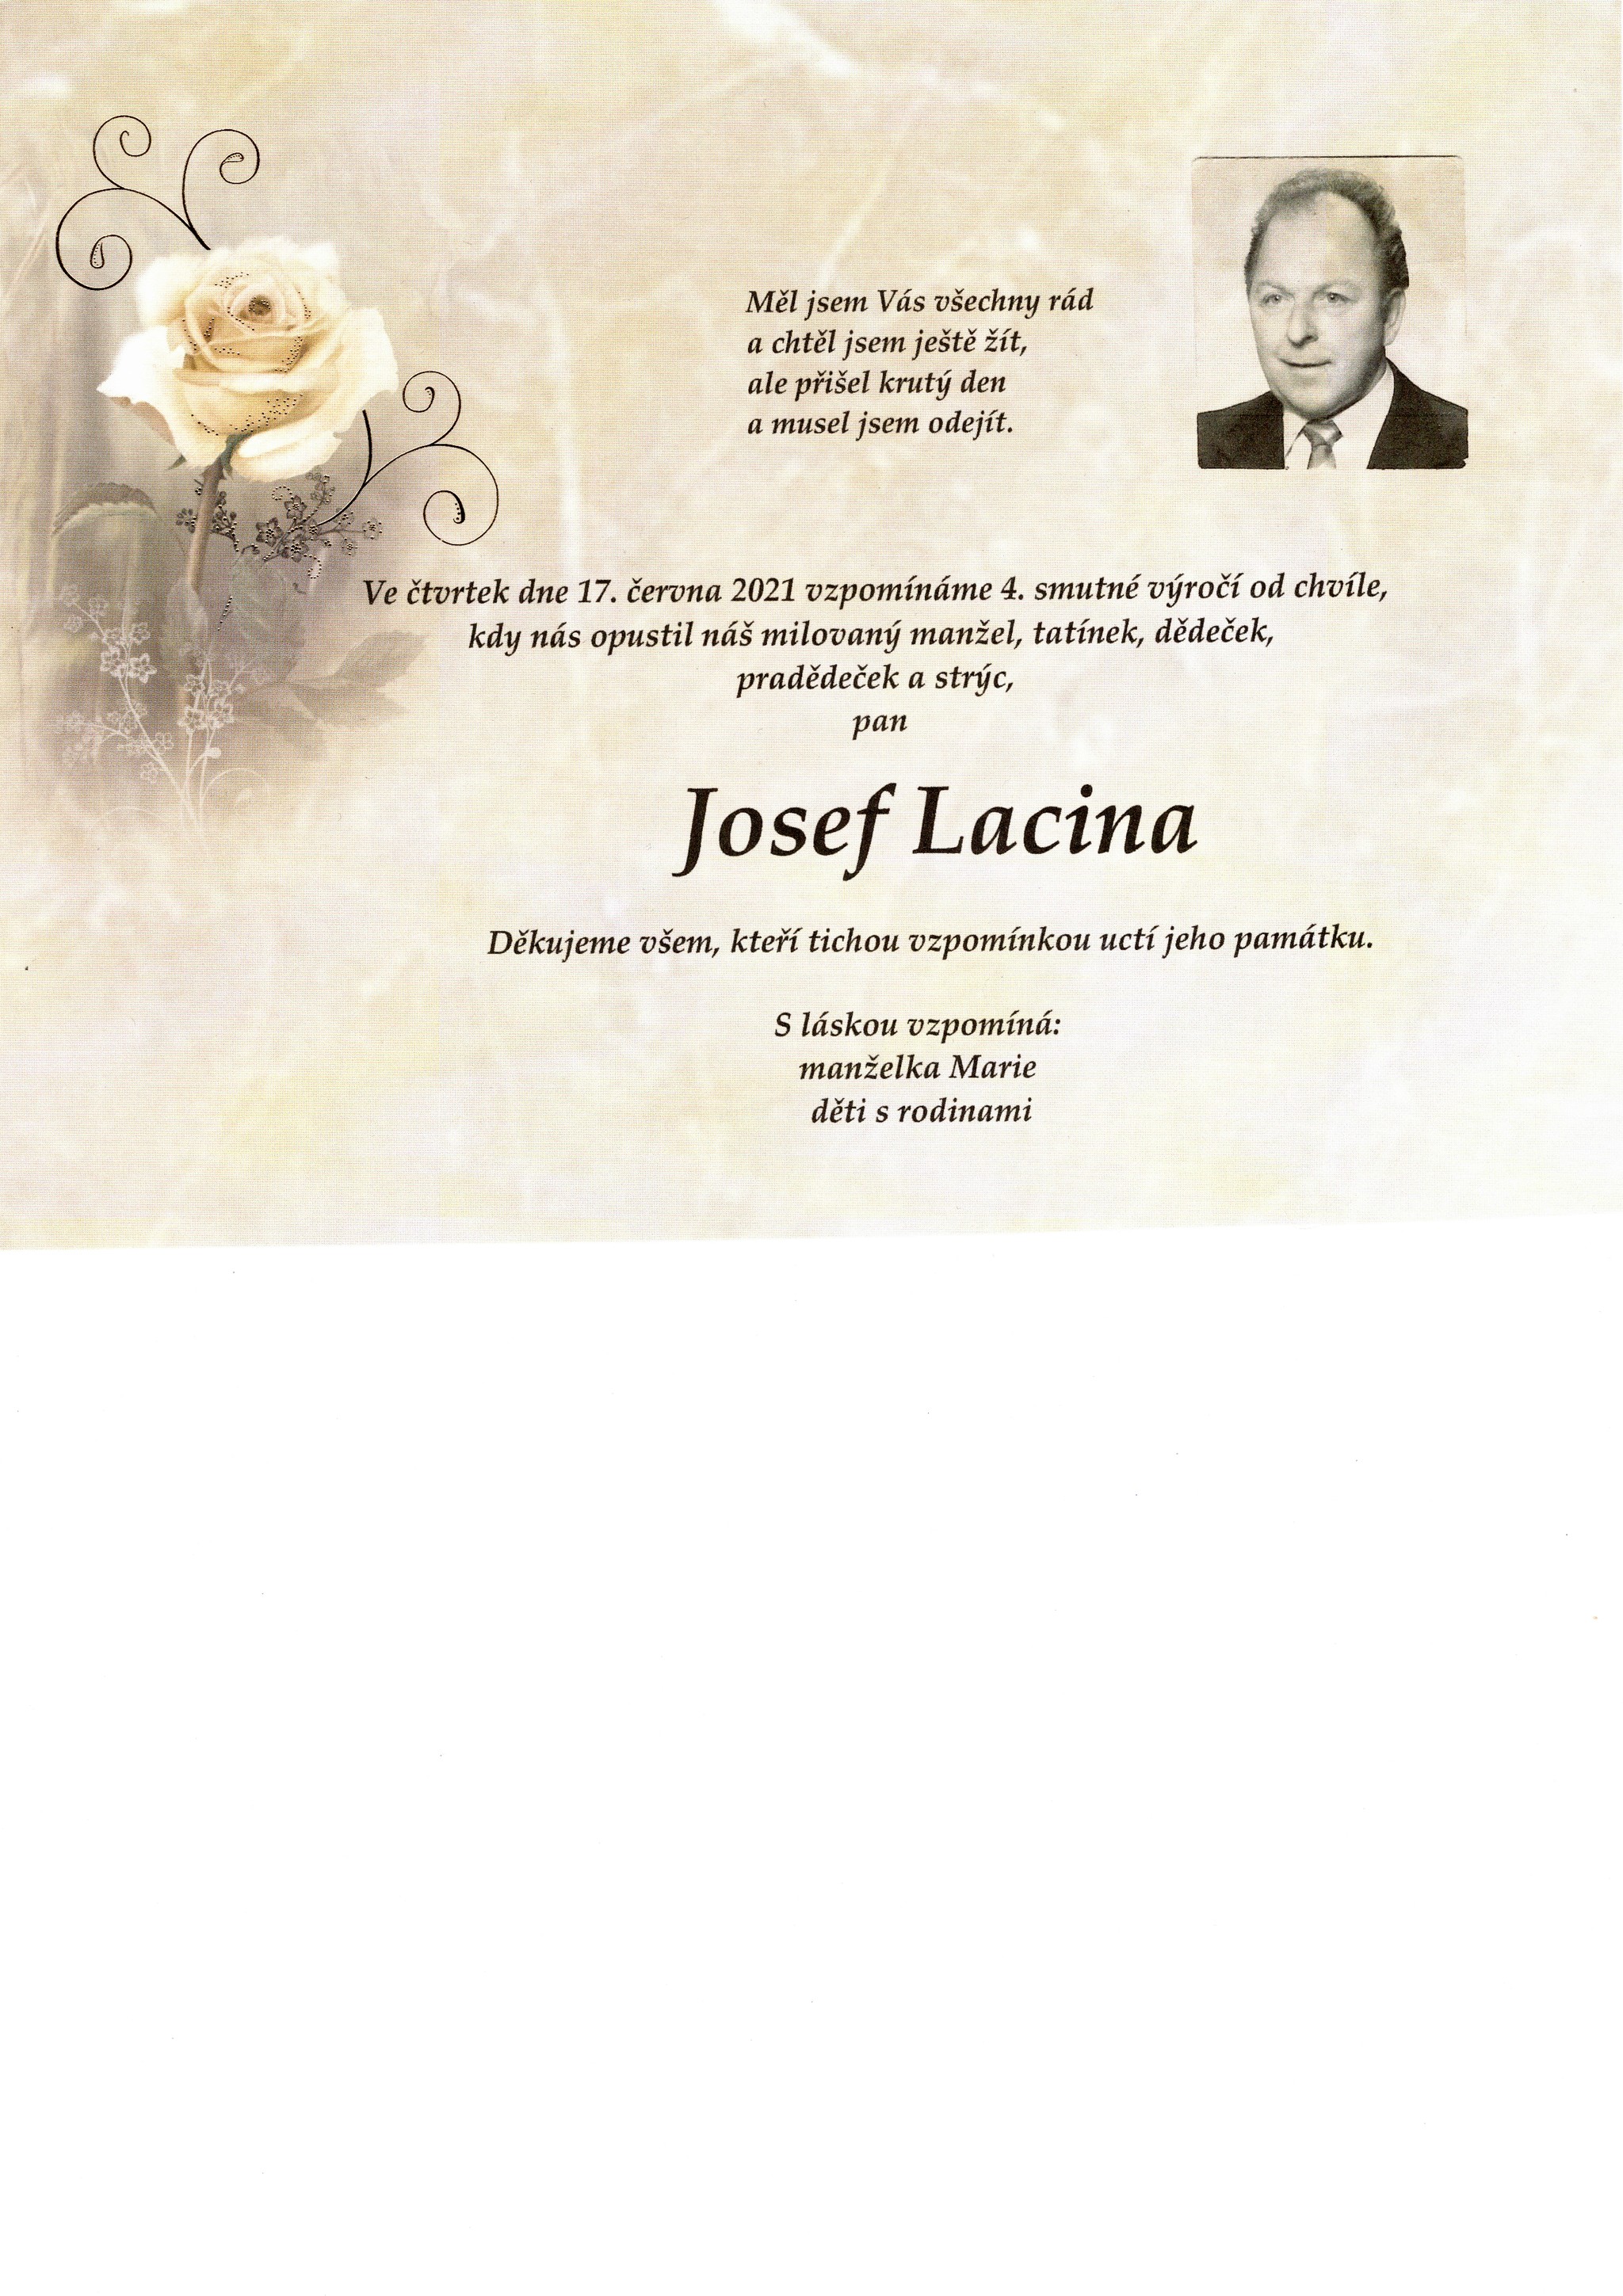 Josef Lacina